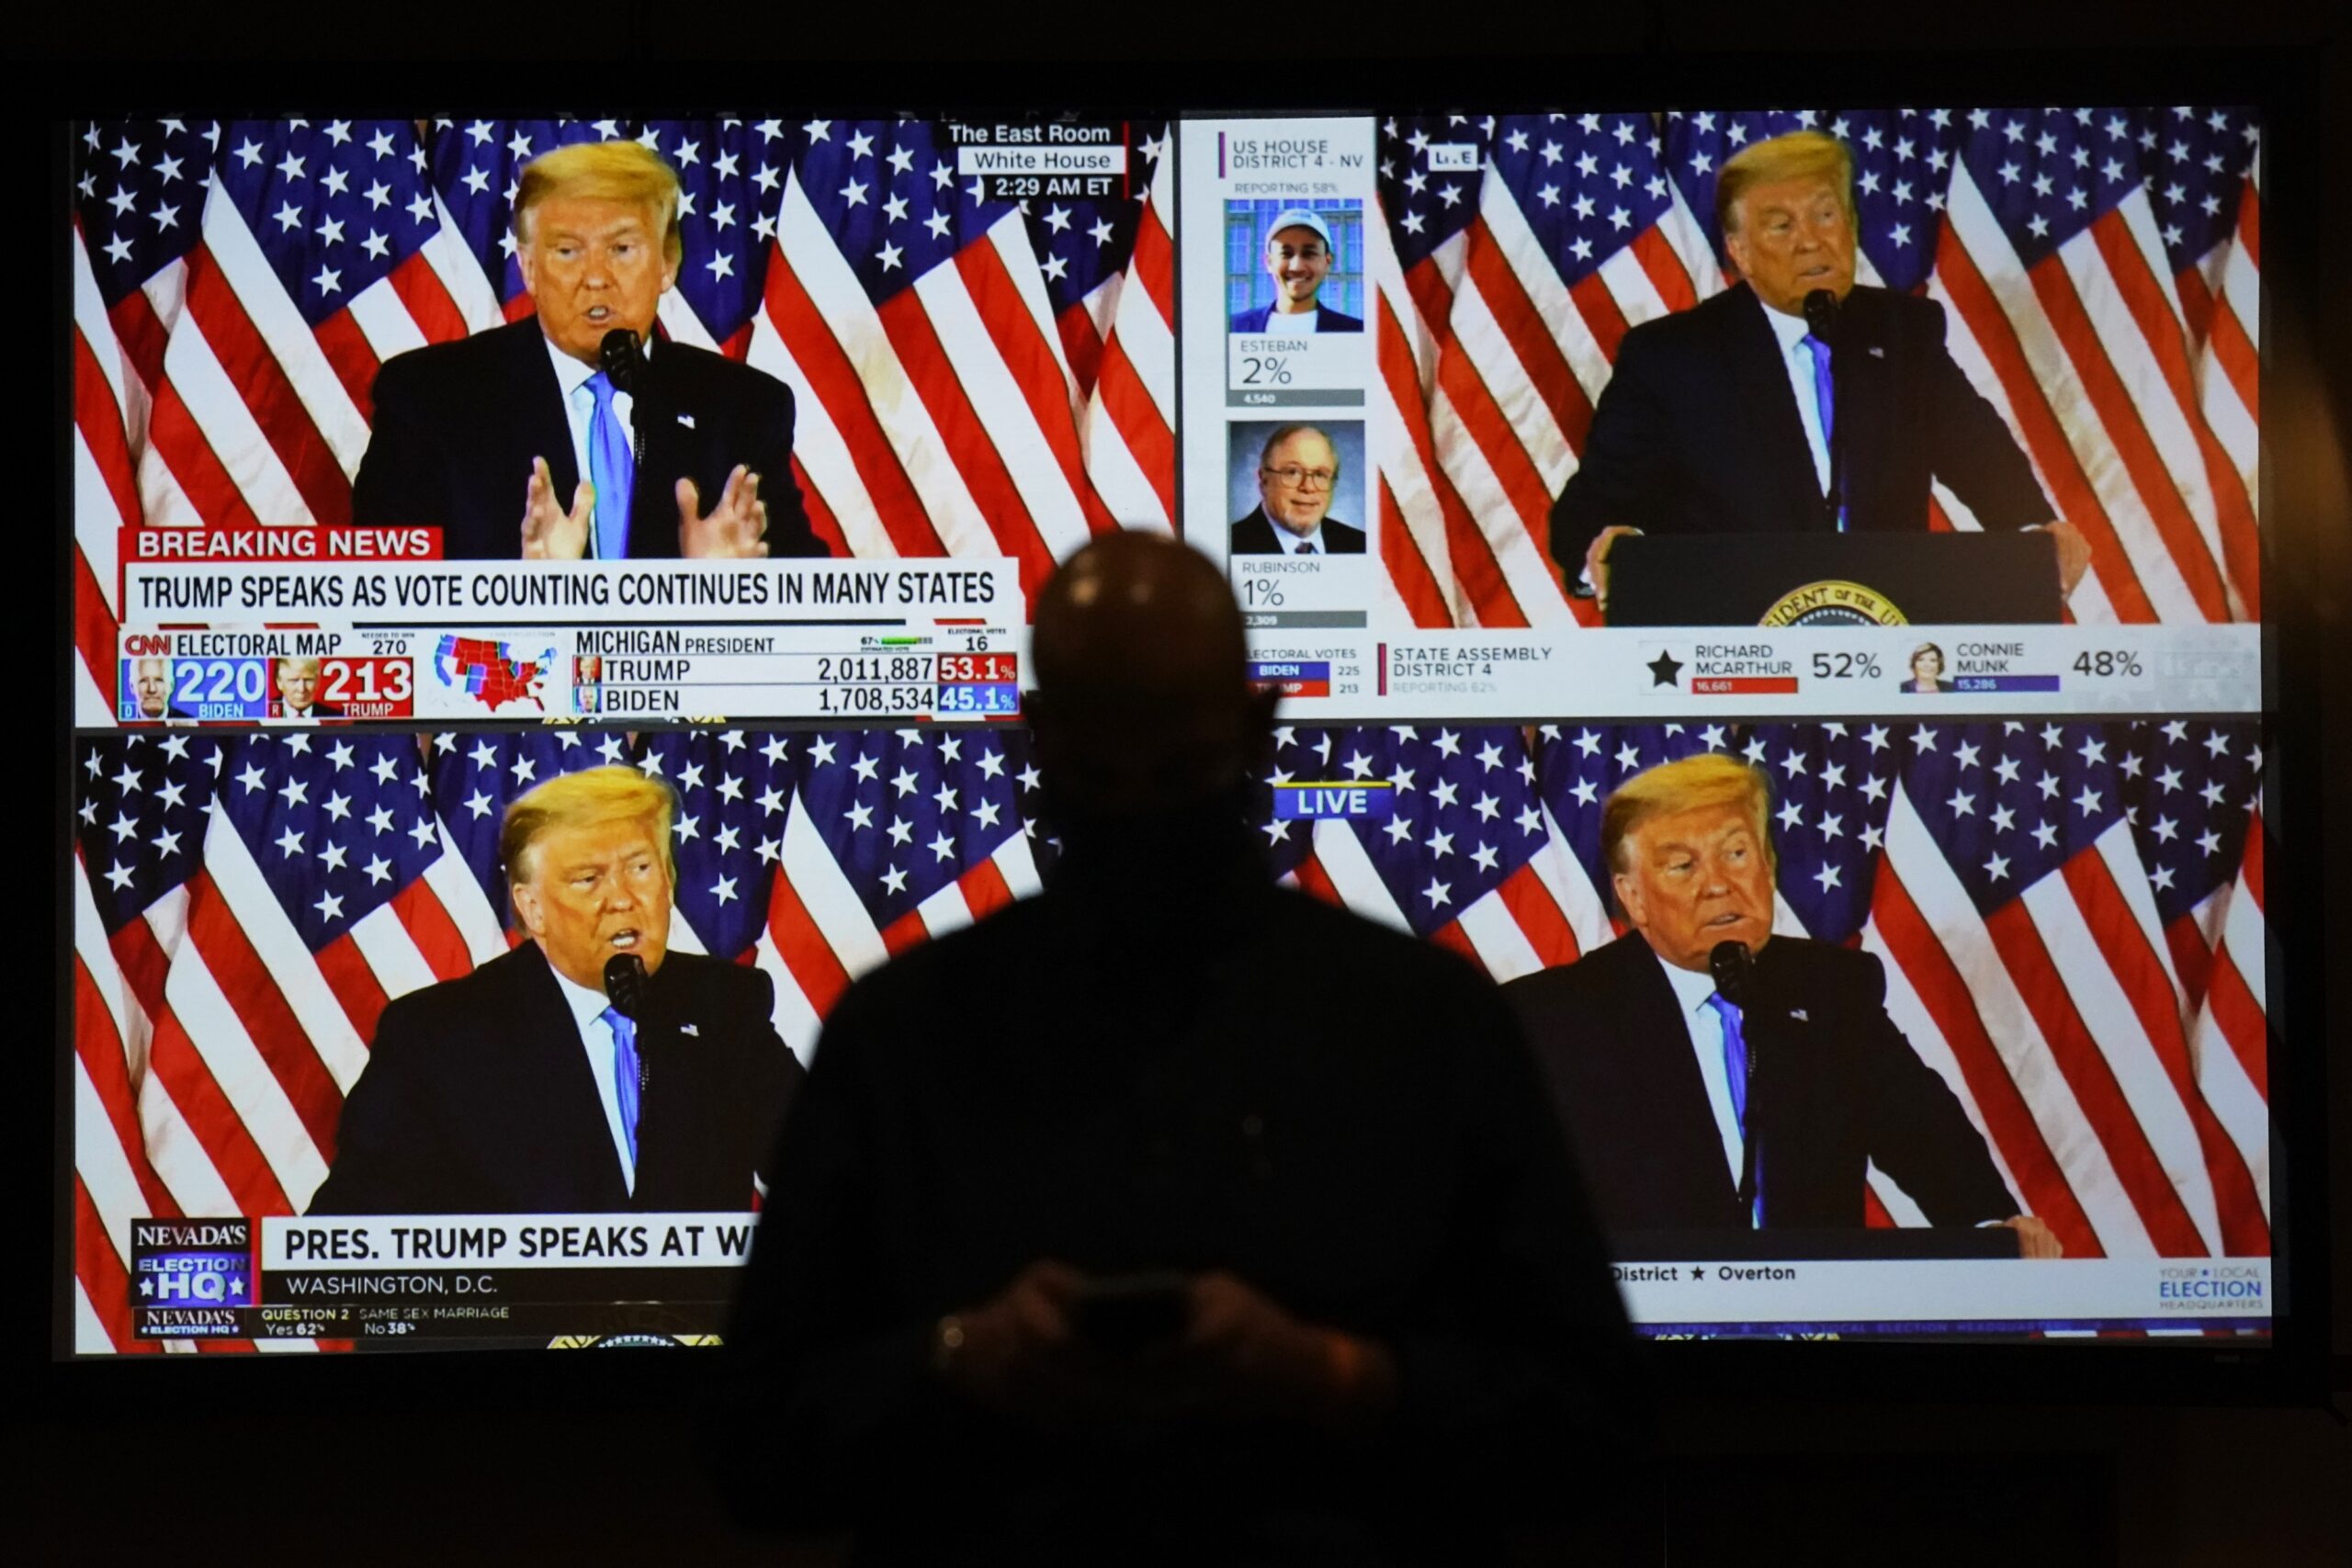 President Trump speaking on election night 2020